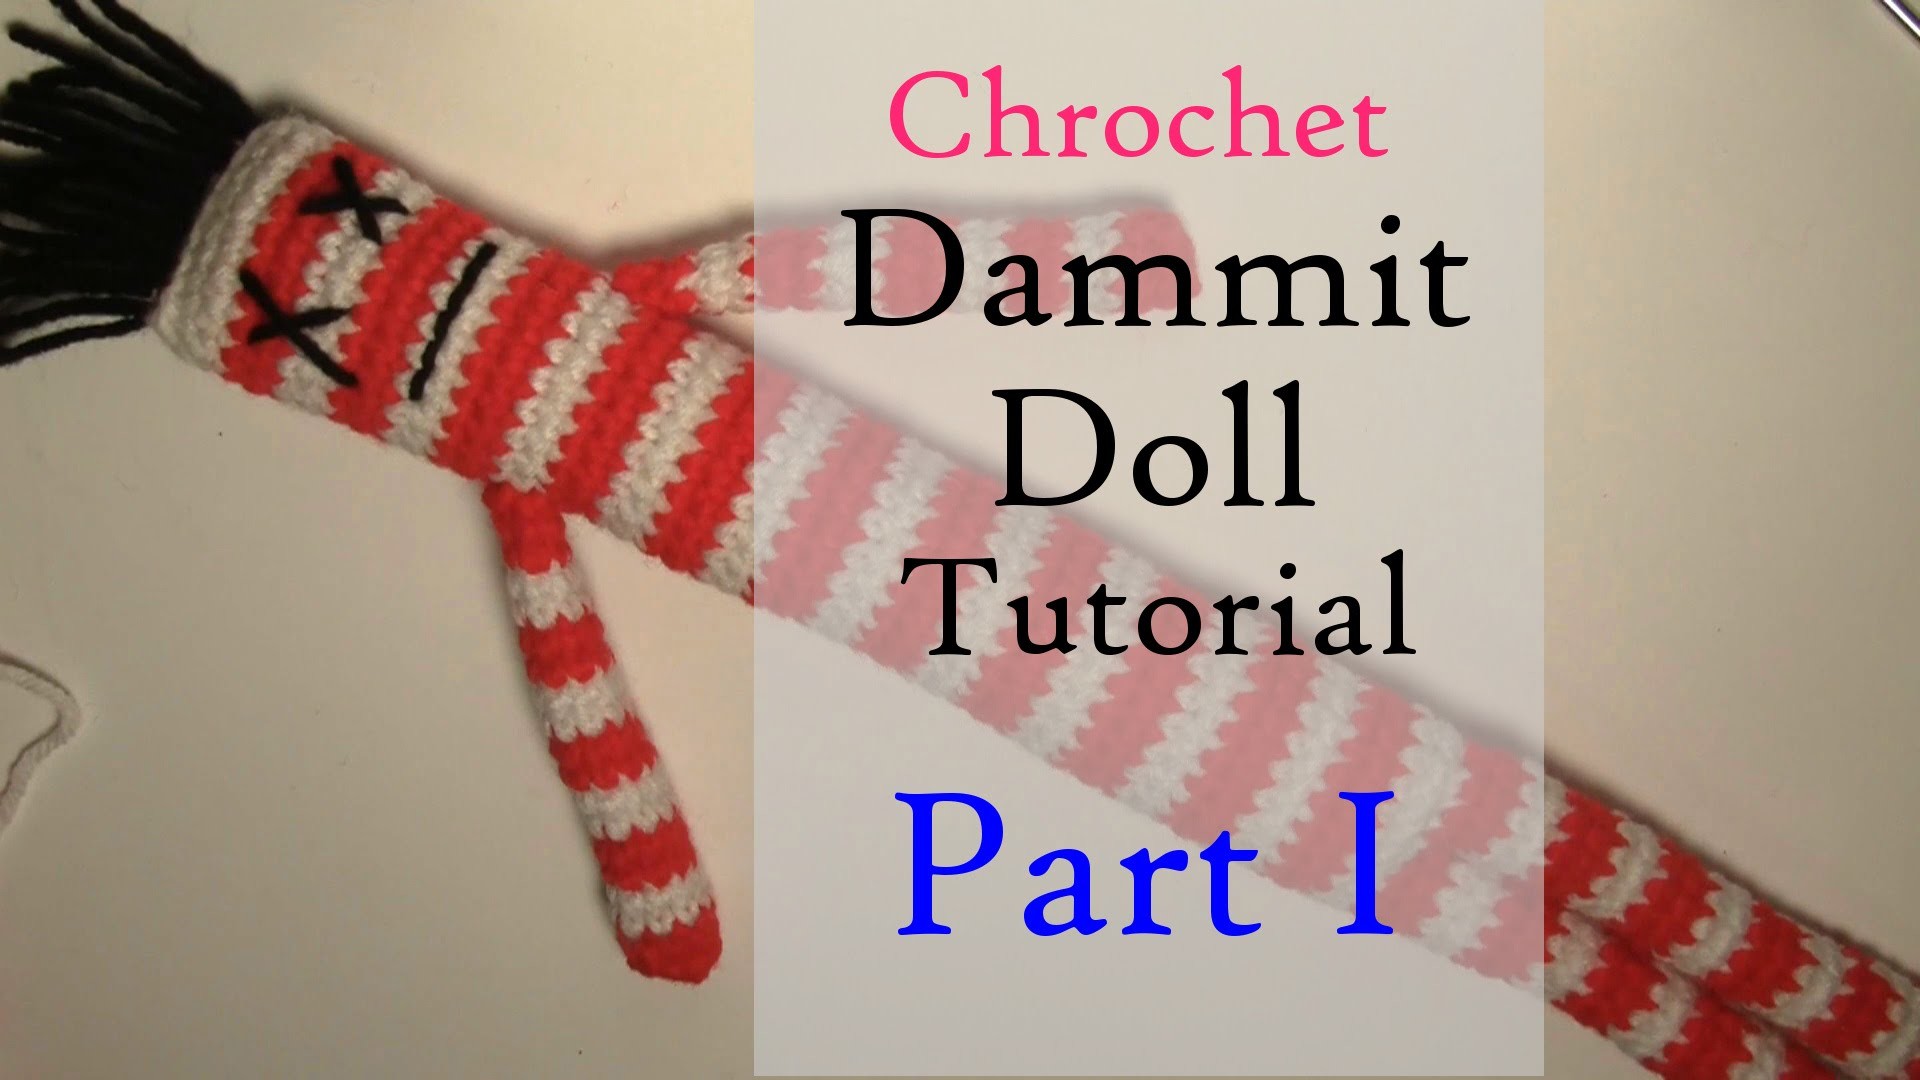 Crochet Dammit Doll Tutorial Pt. 1, DiannaAnna